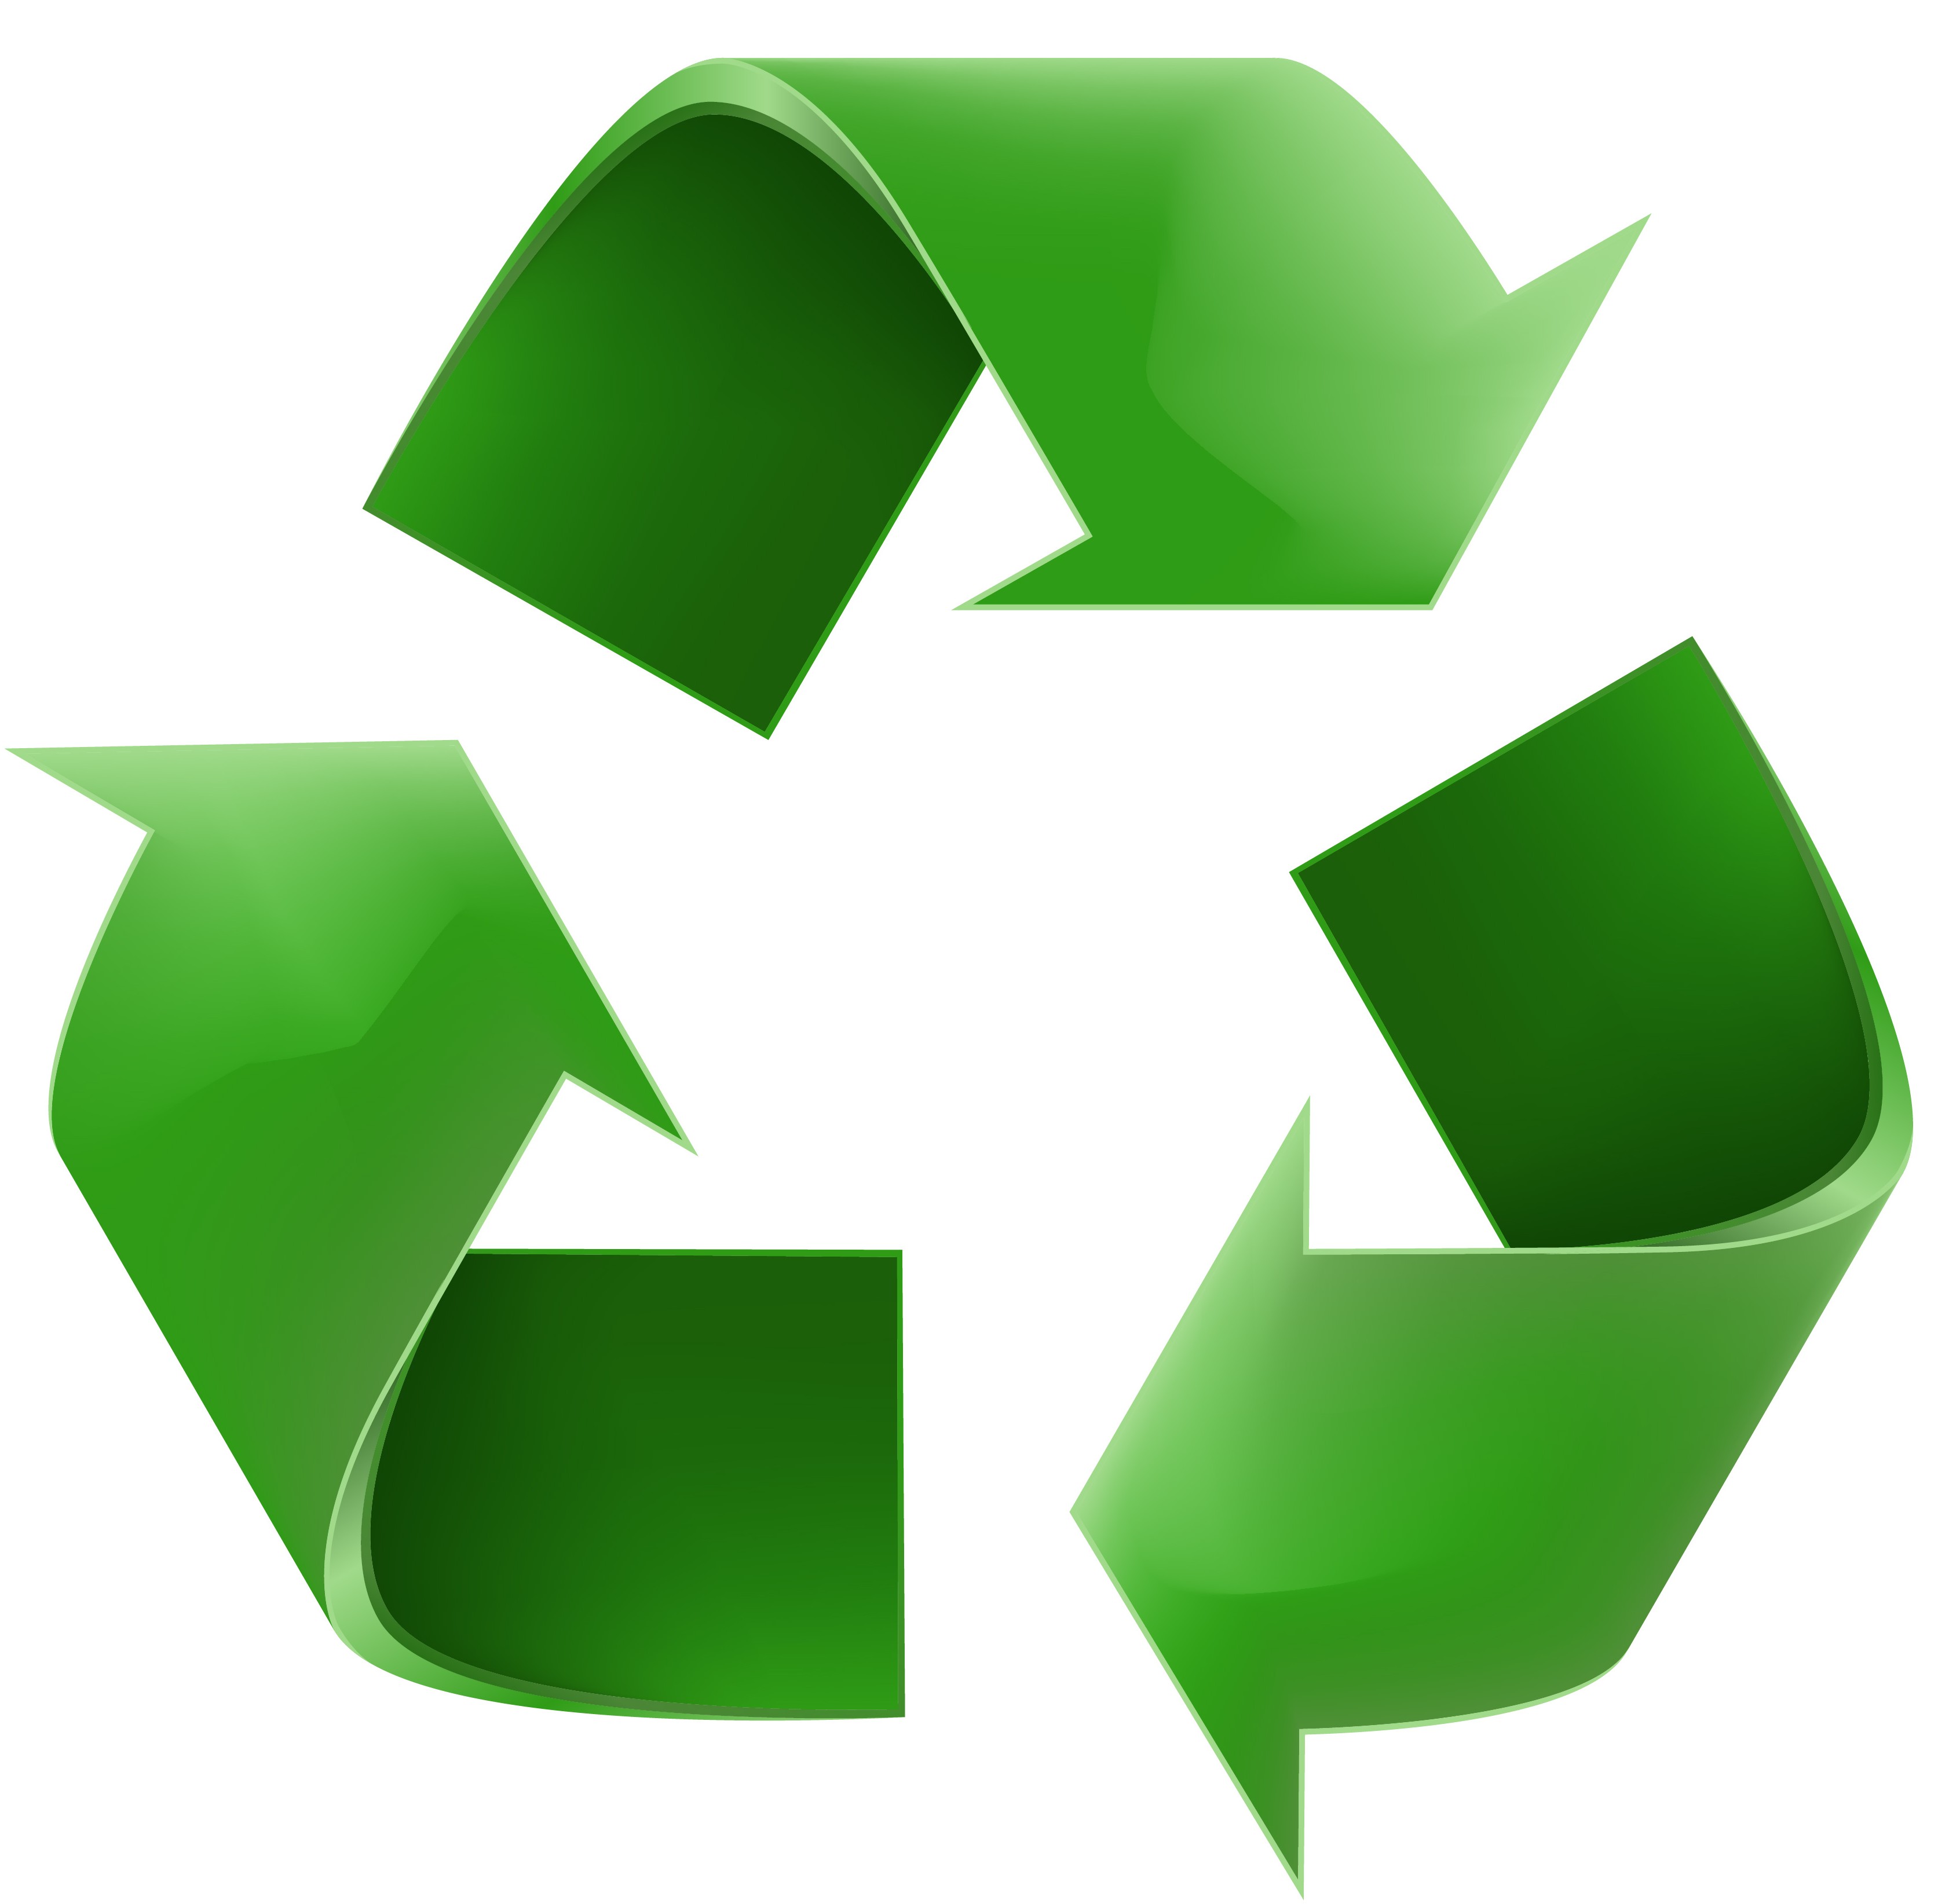 3D Recycle Logo wallpaper – wallpaper free download